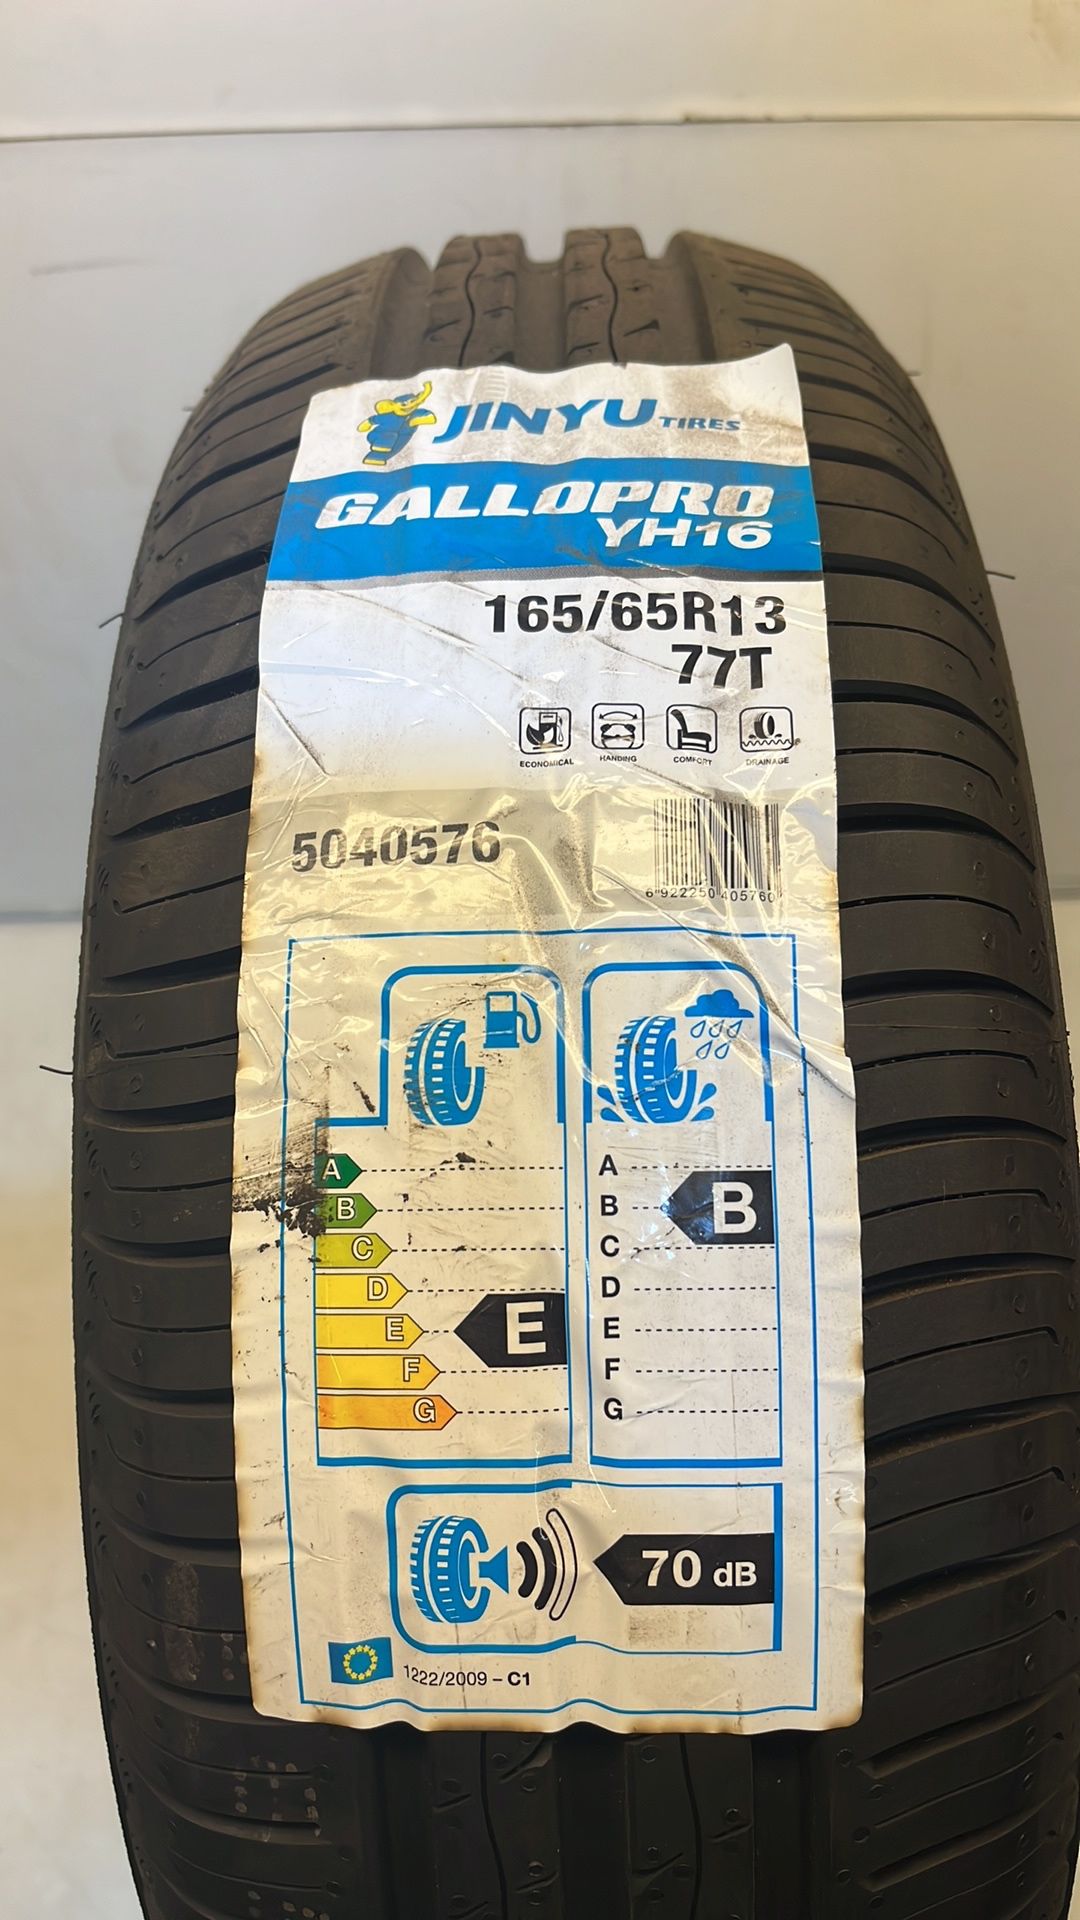 Jinyu Tires | Gallopro YH16 | 165/65R13 Tyre